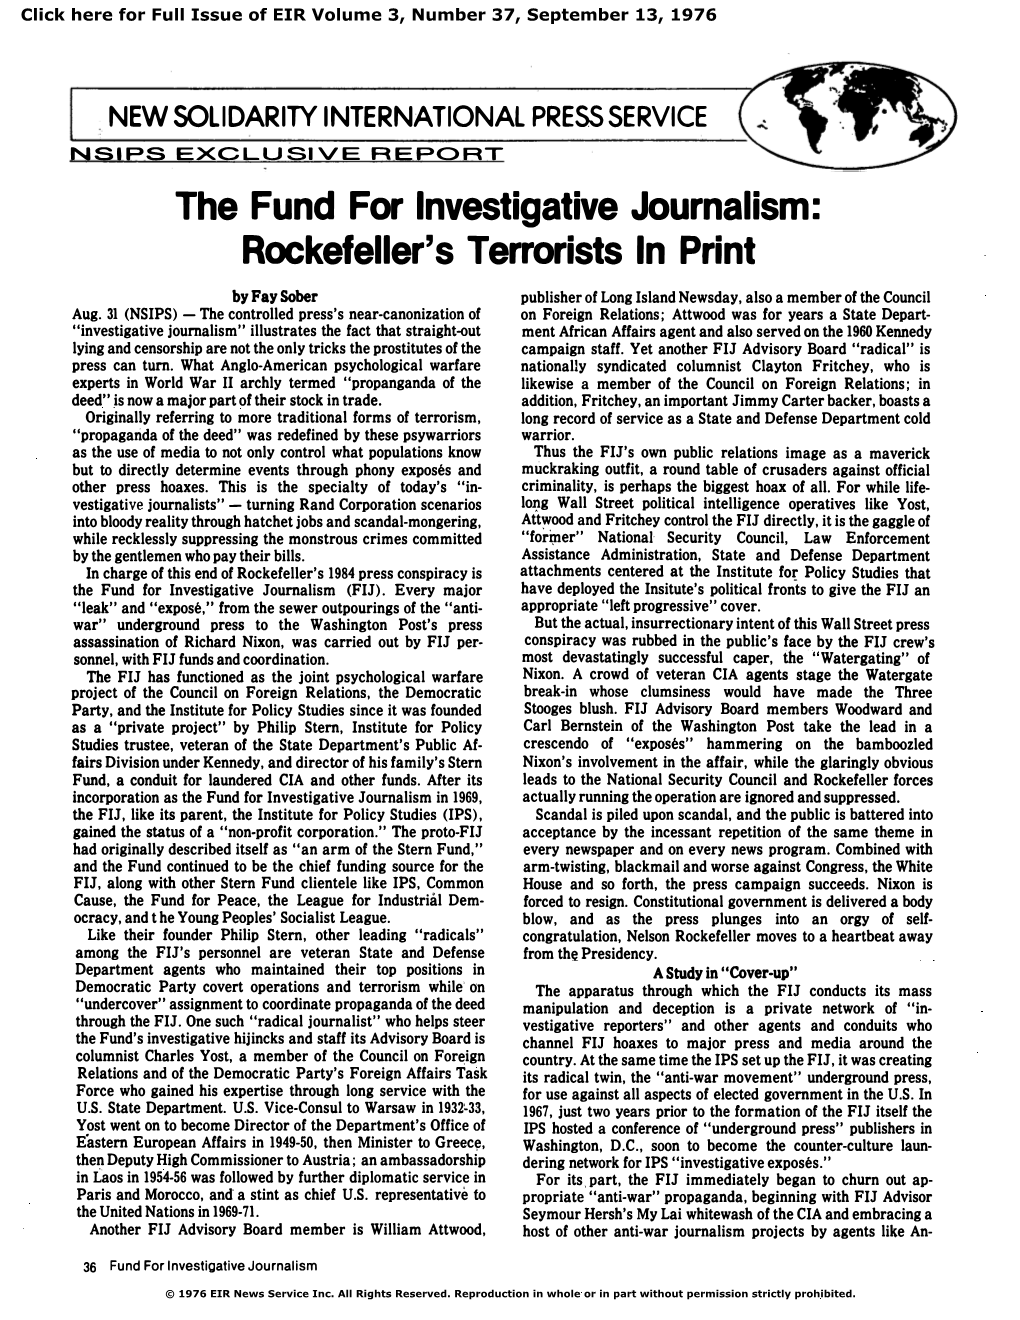 The Fund for Investigative Journalism: Rockefeller's Terrorists in Print